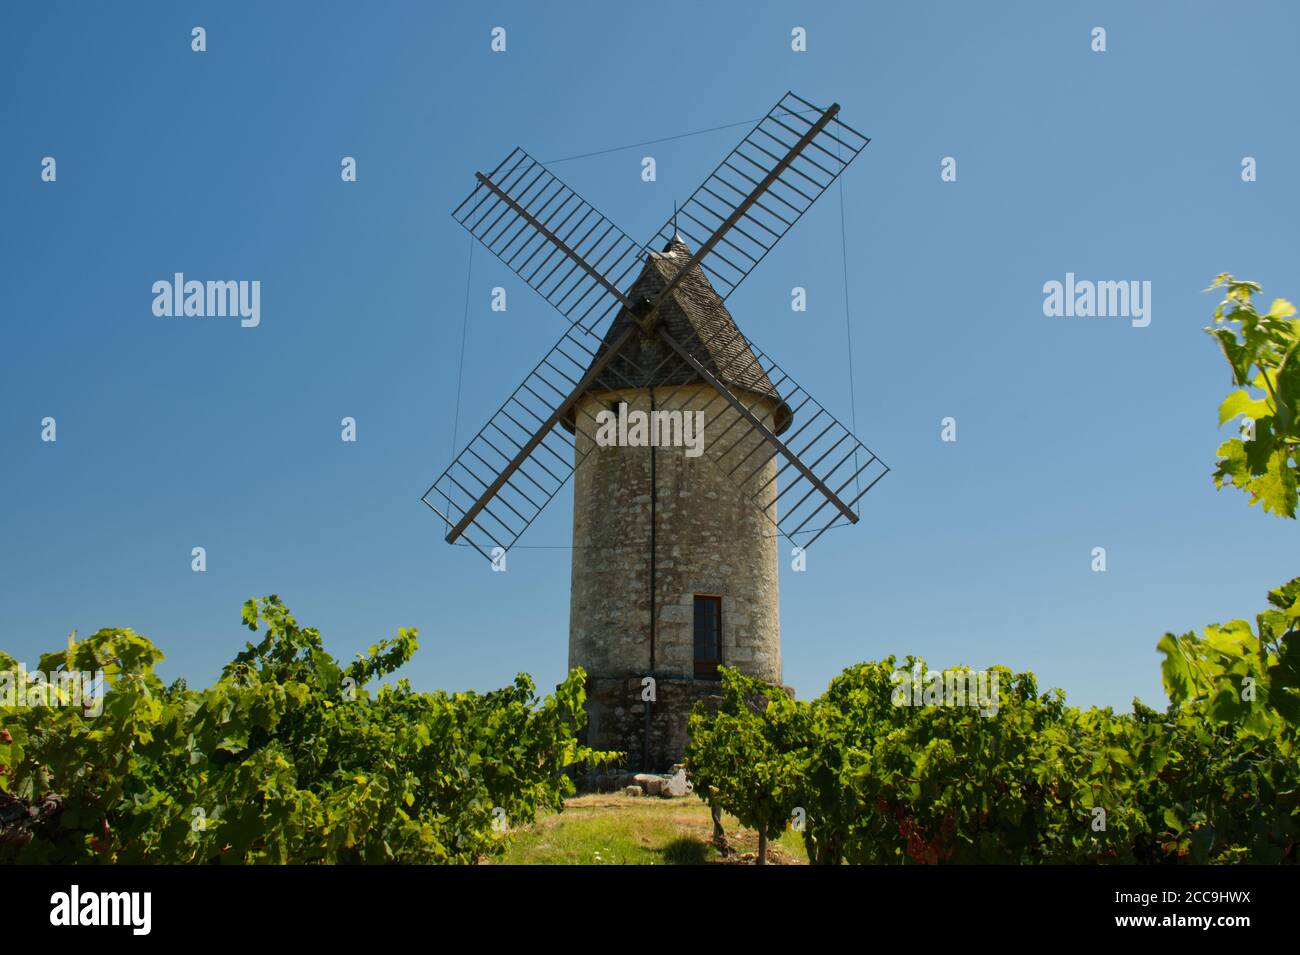 Old windmill in the vineyard at Villeneuve-de-Duras, Lot-et-garonne, France Stock Photo